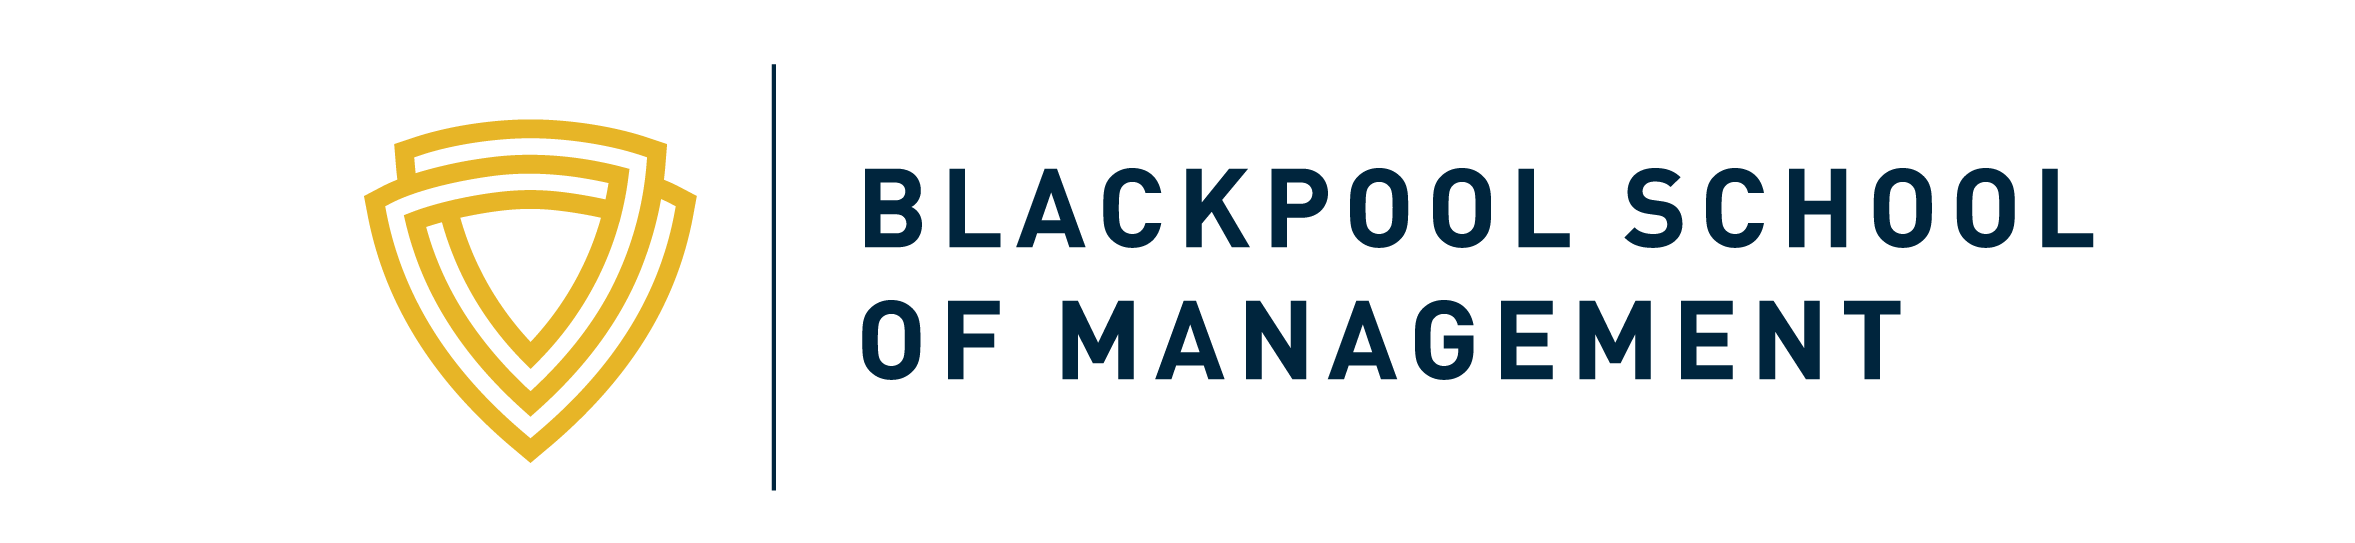 Blackpool School of Management logo